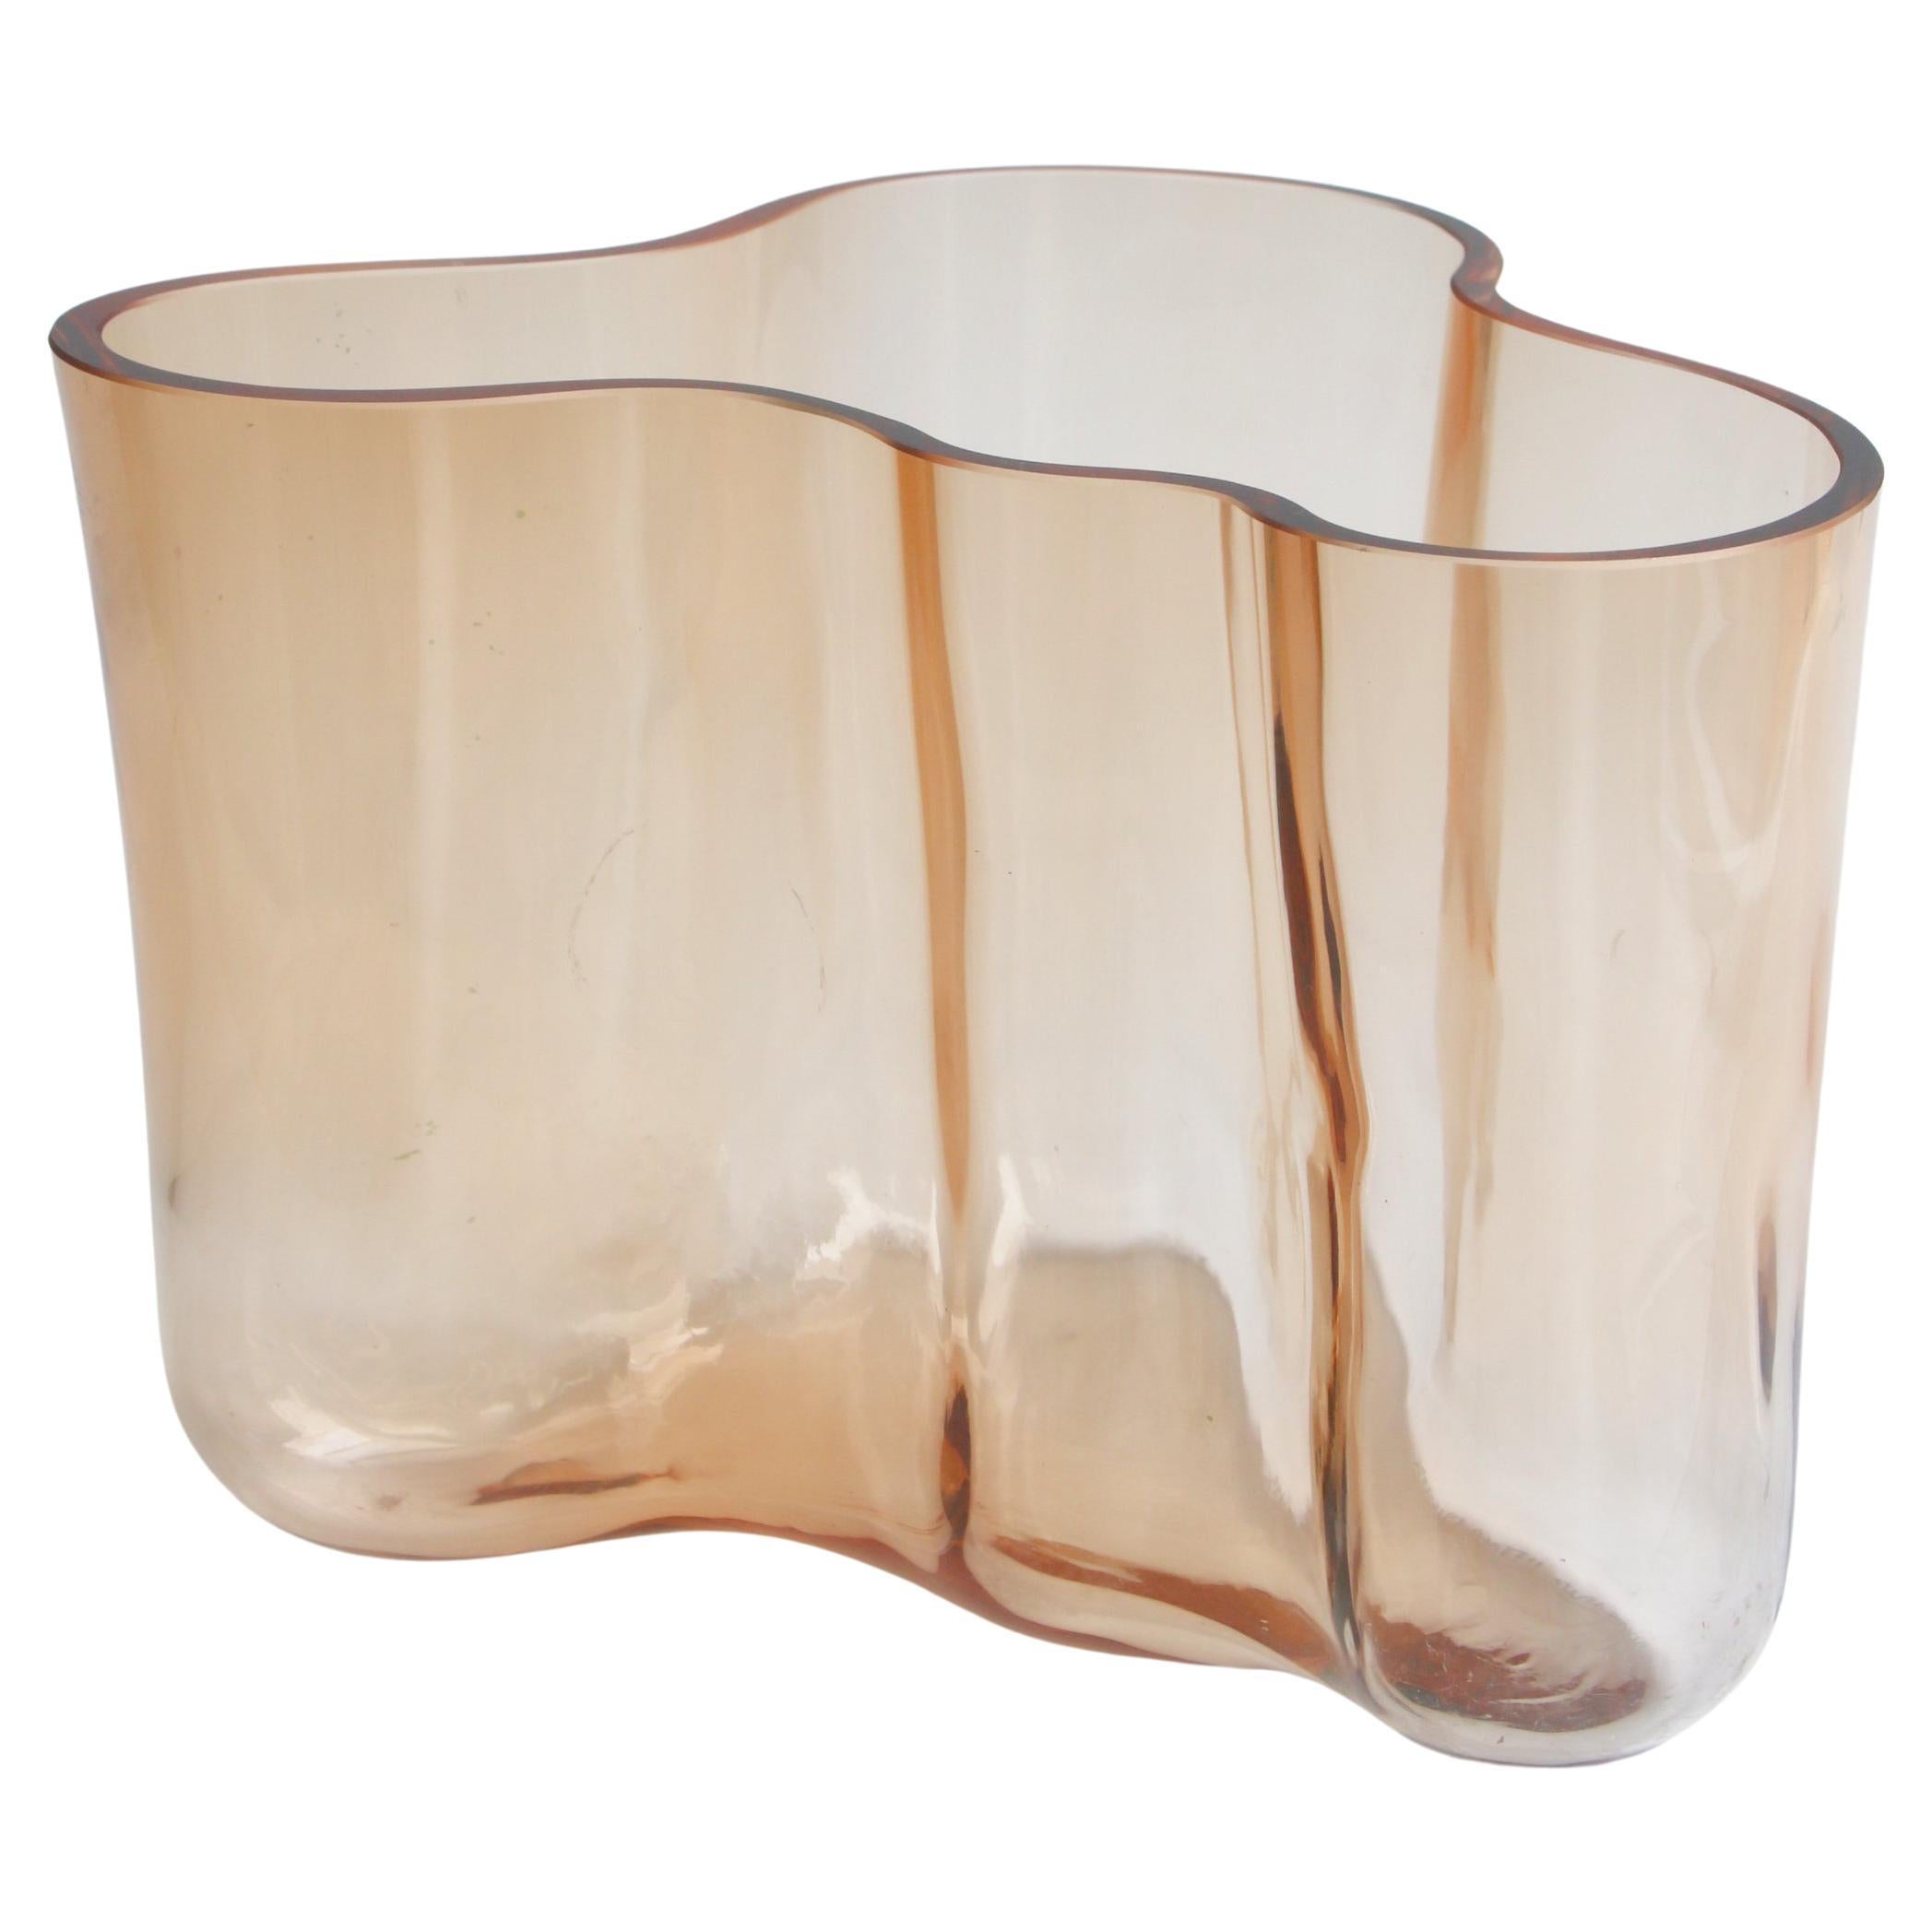 Alvar Aalto "Savoy" Vase in Caramel-Tinted Glass, Iittala, Finland at  1stDibs